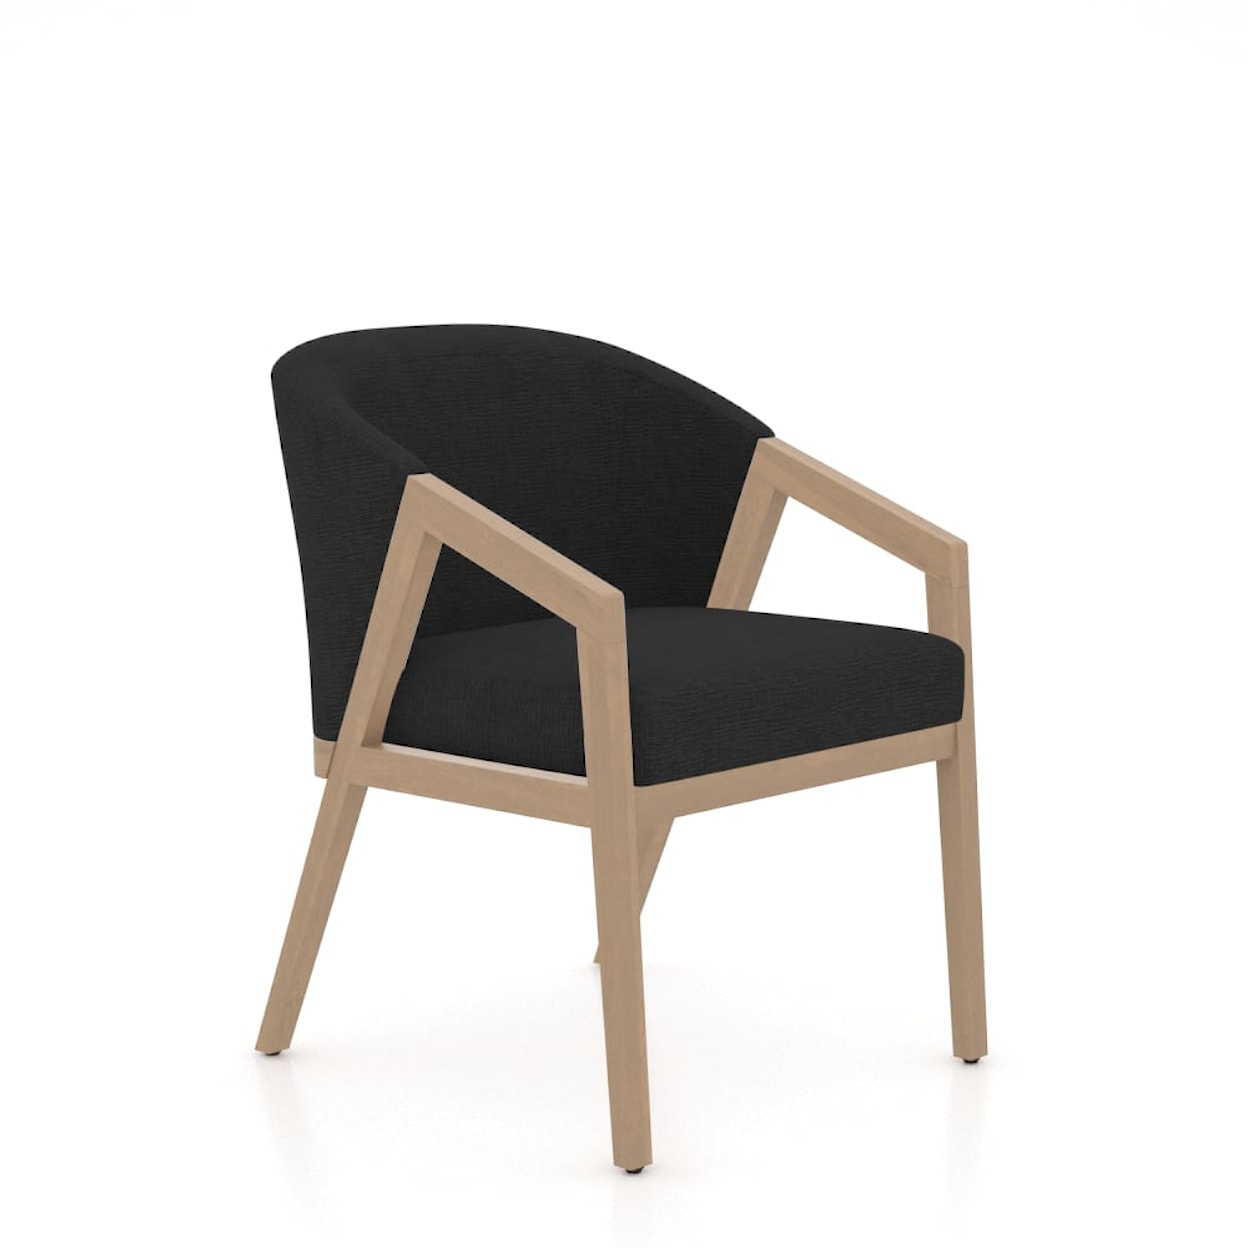 Canadel Modern Customizable Chair